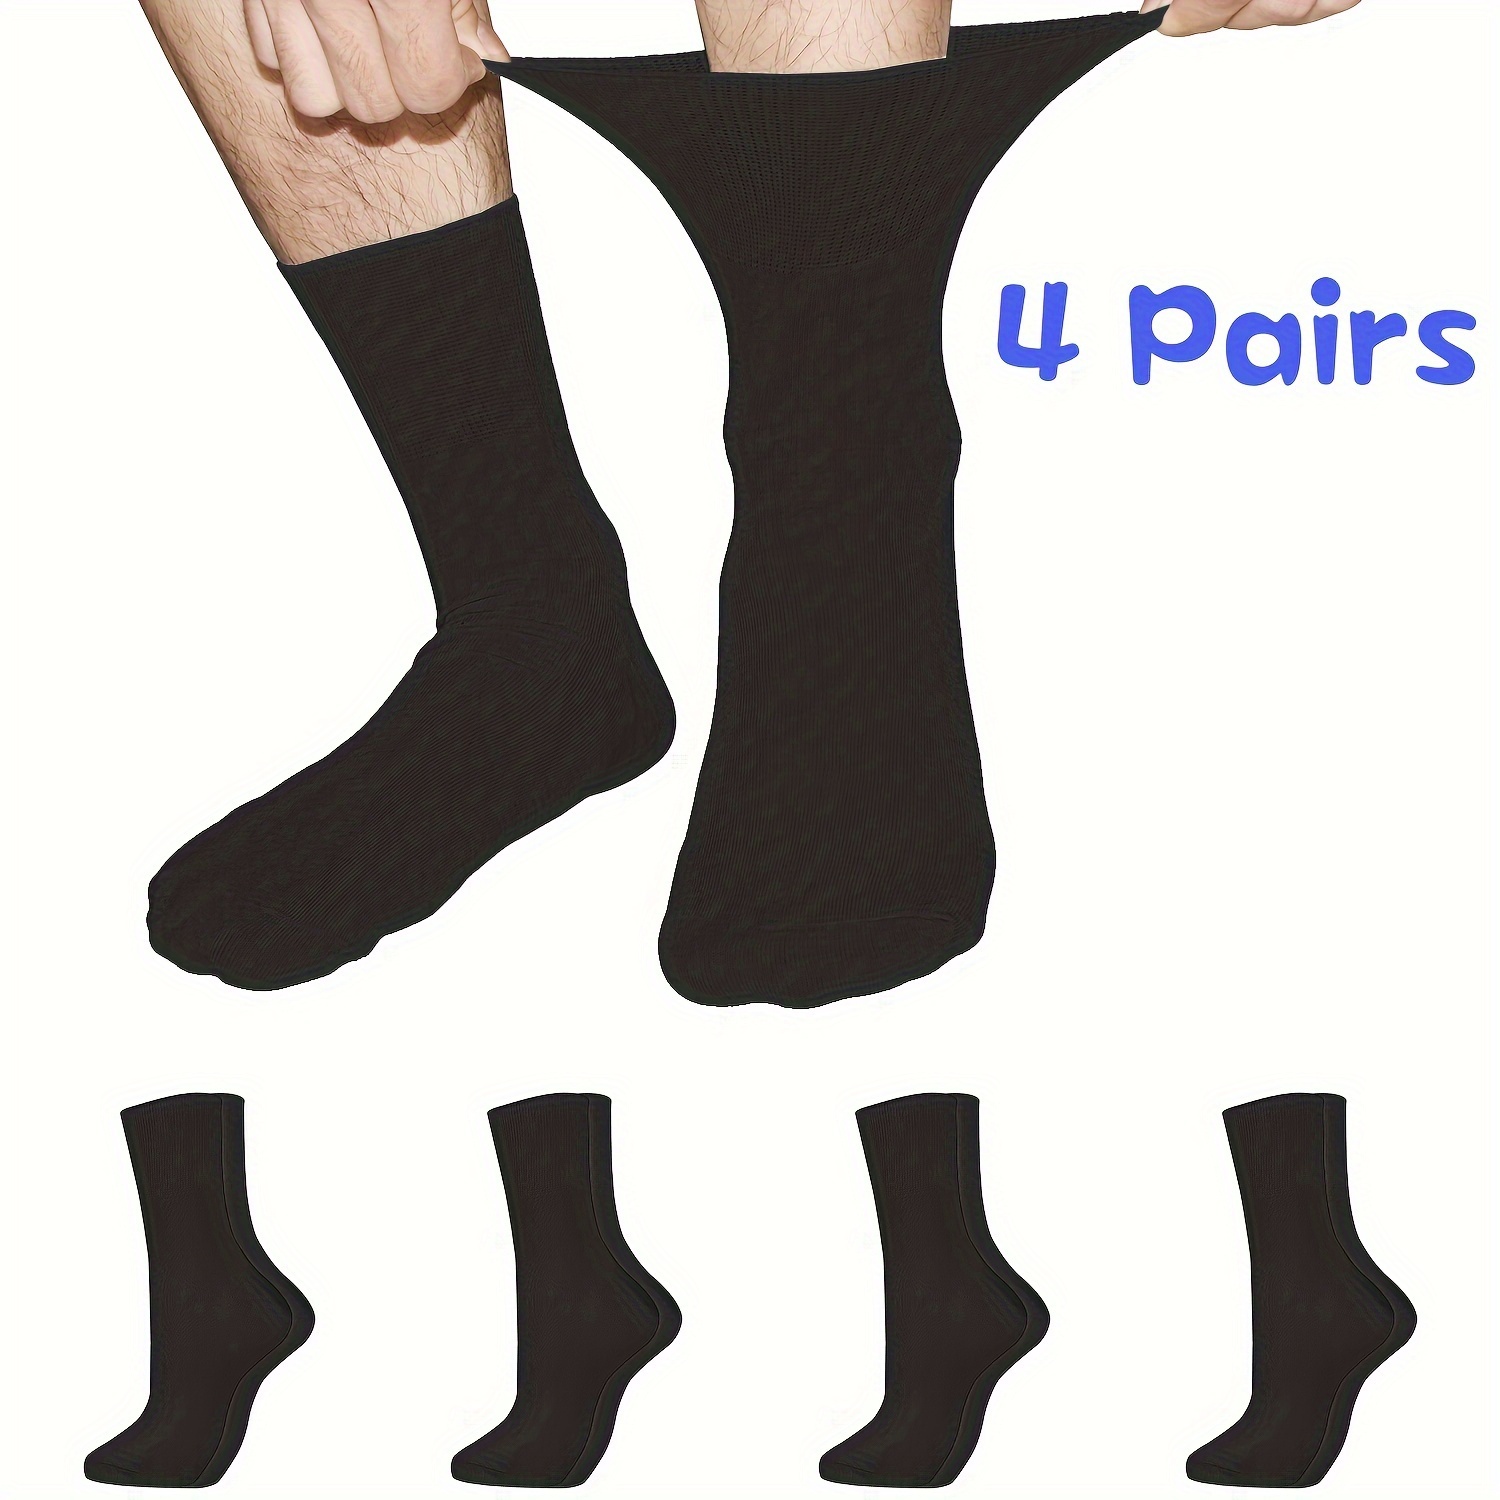 

4 Pairs Of Men's Soldi Color Mid-calf Diabetic Socks, Comfy Non-binding Cotton Socks For All Season, Creative Trendy Gift